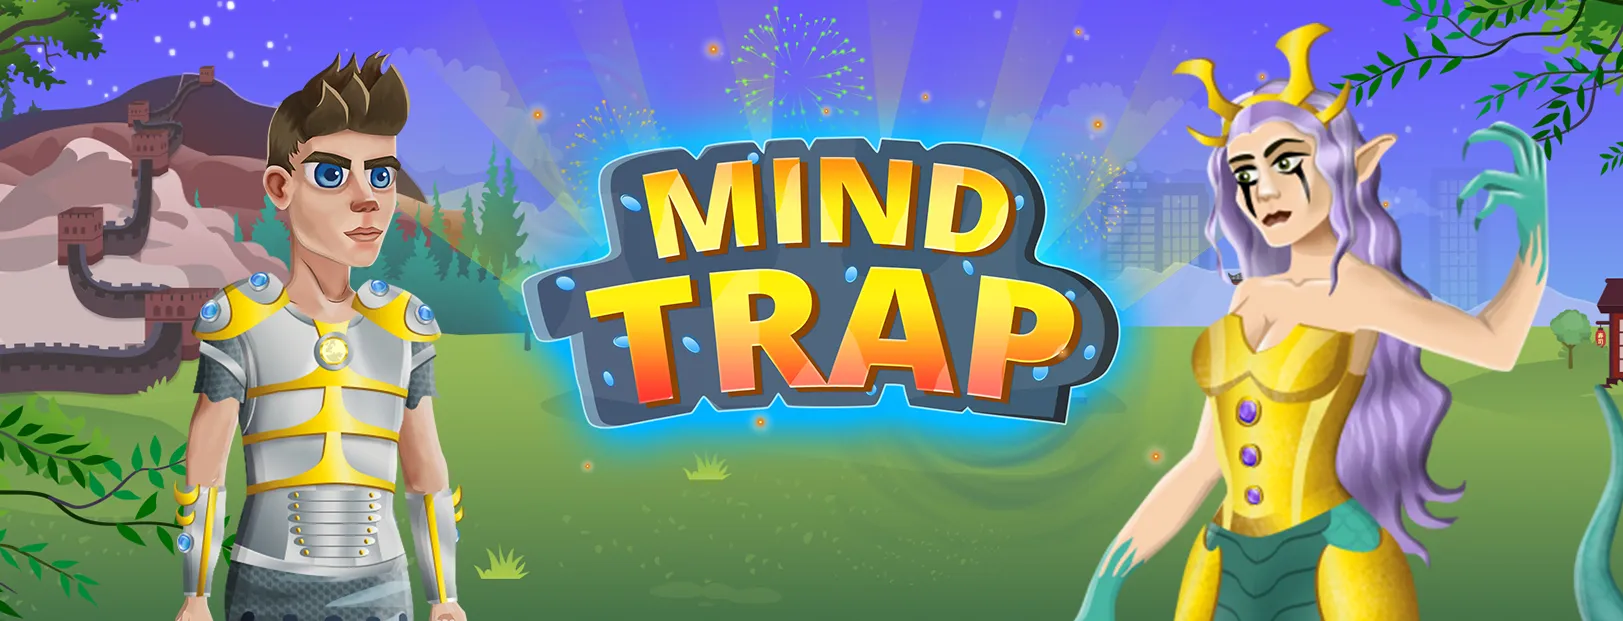 Mind trap